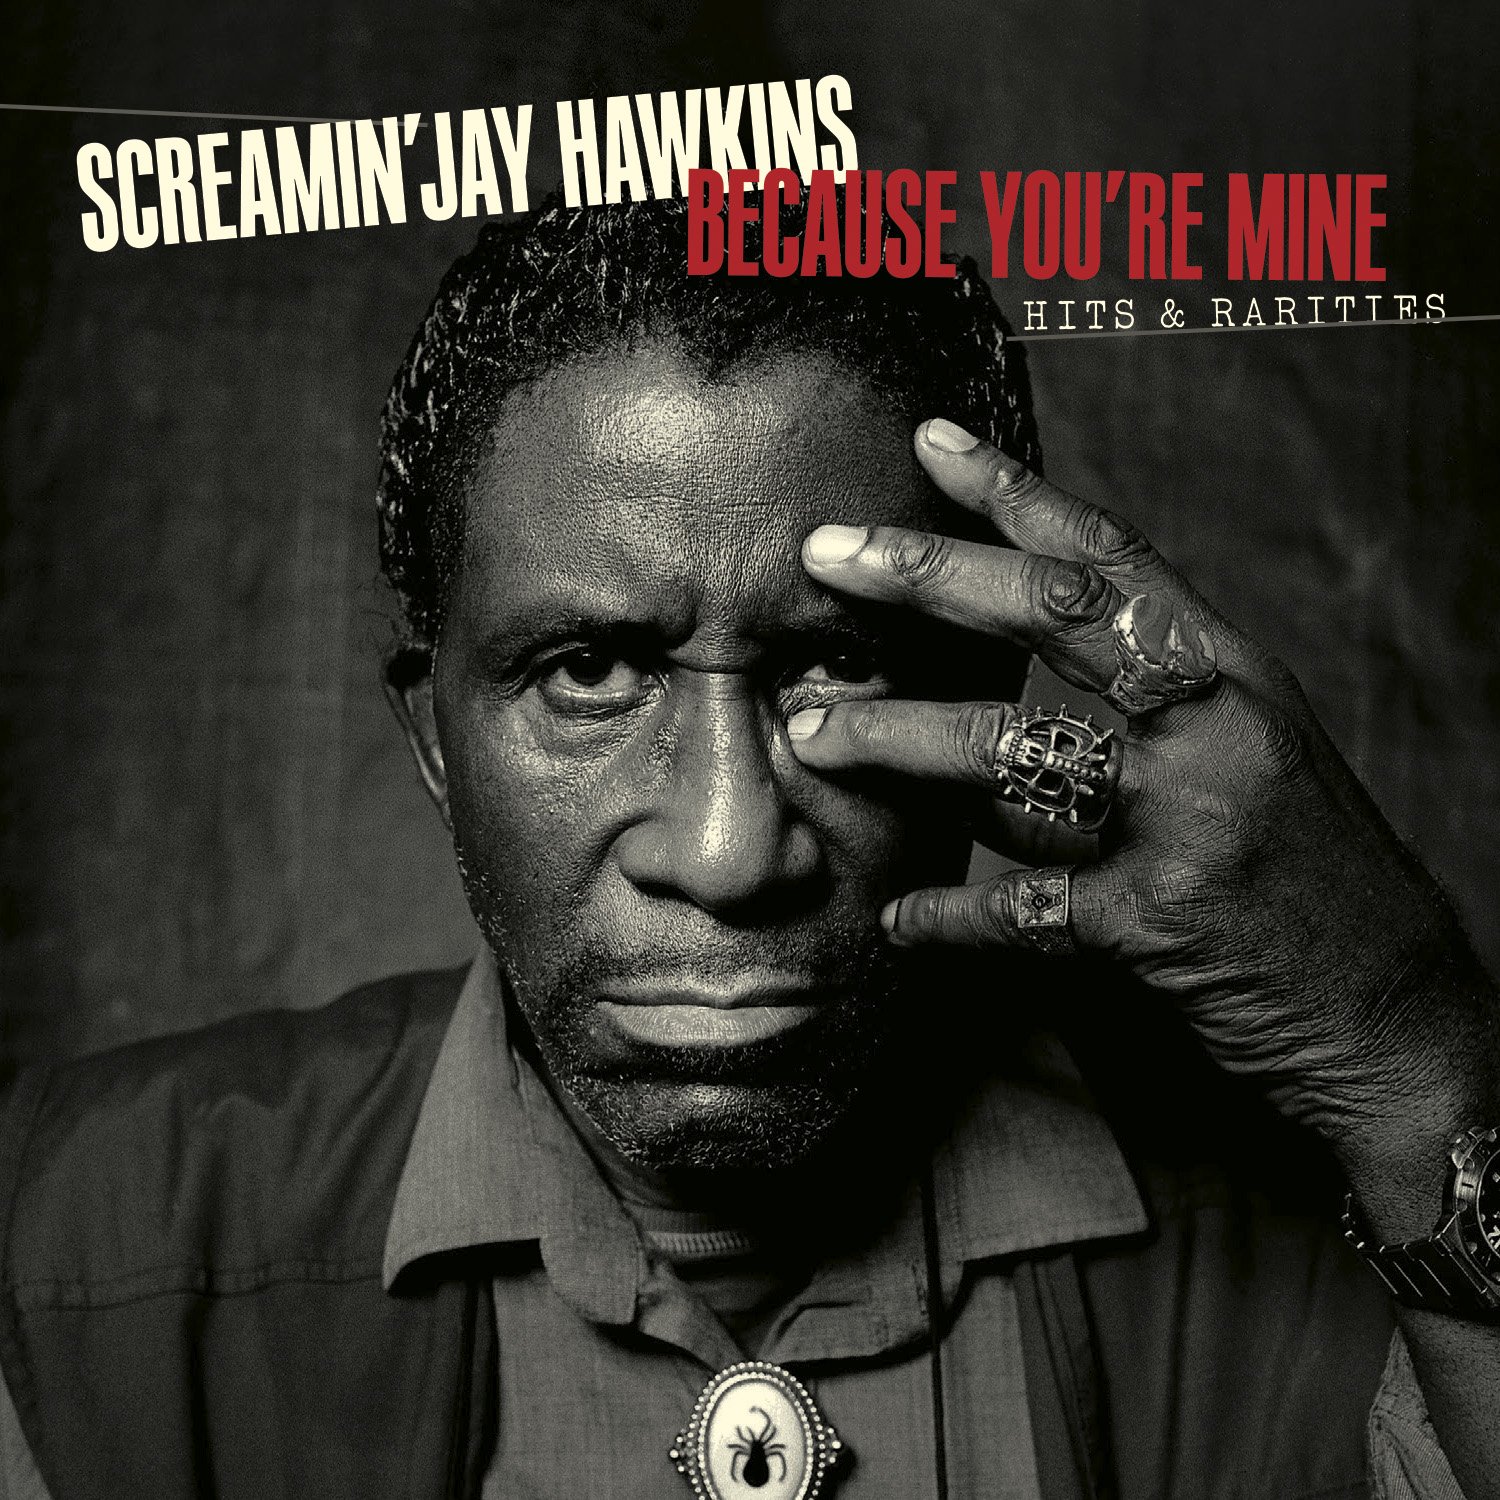 CD-SBR-7034 Screamin' Jay Hawkins Cover 1500px.jpg